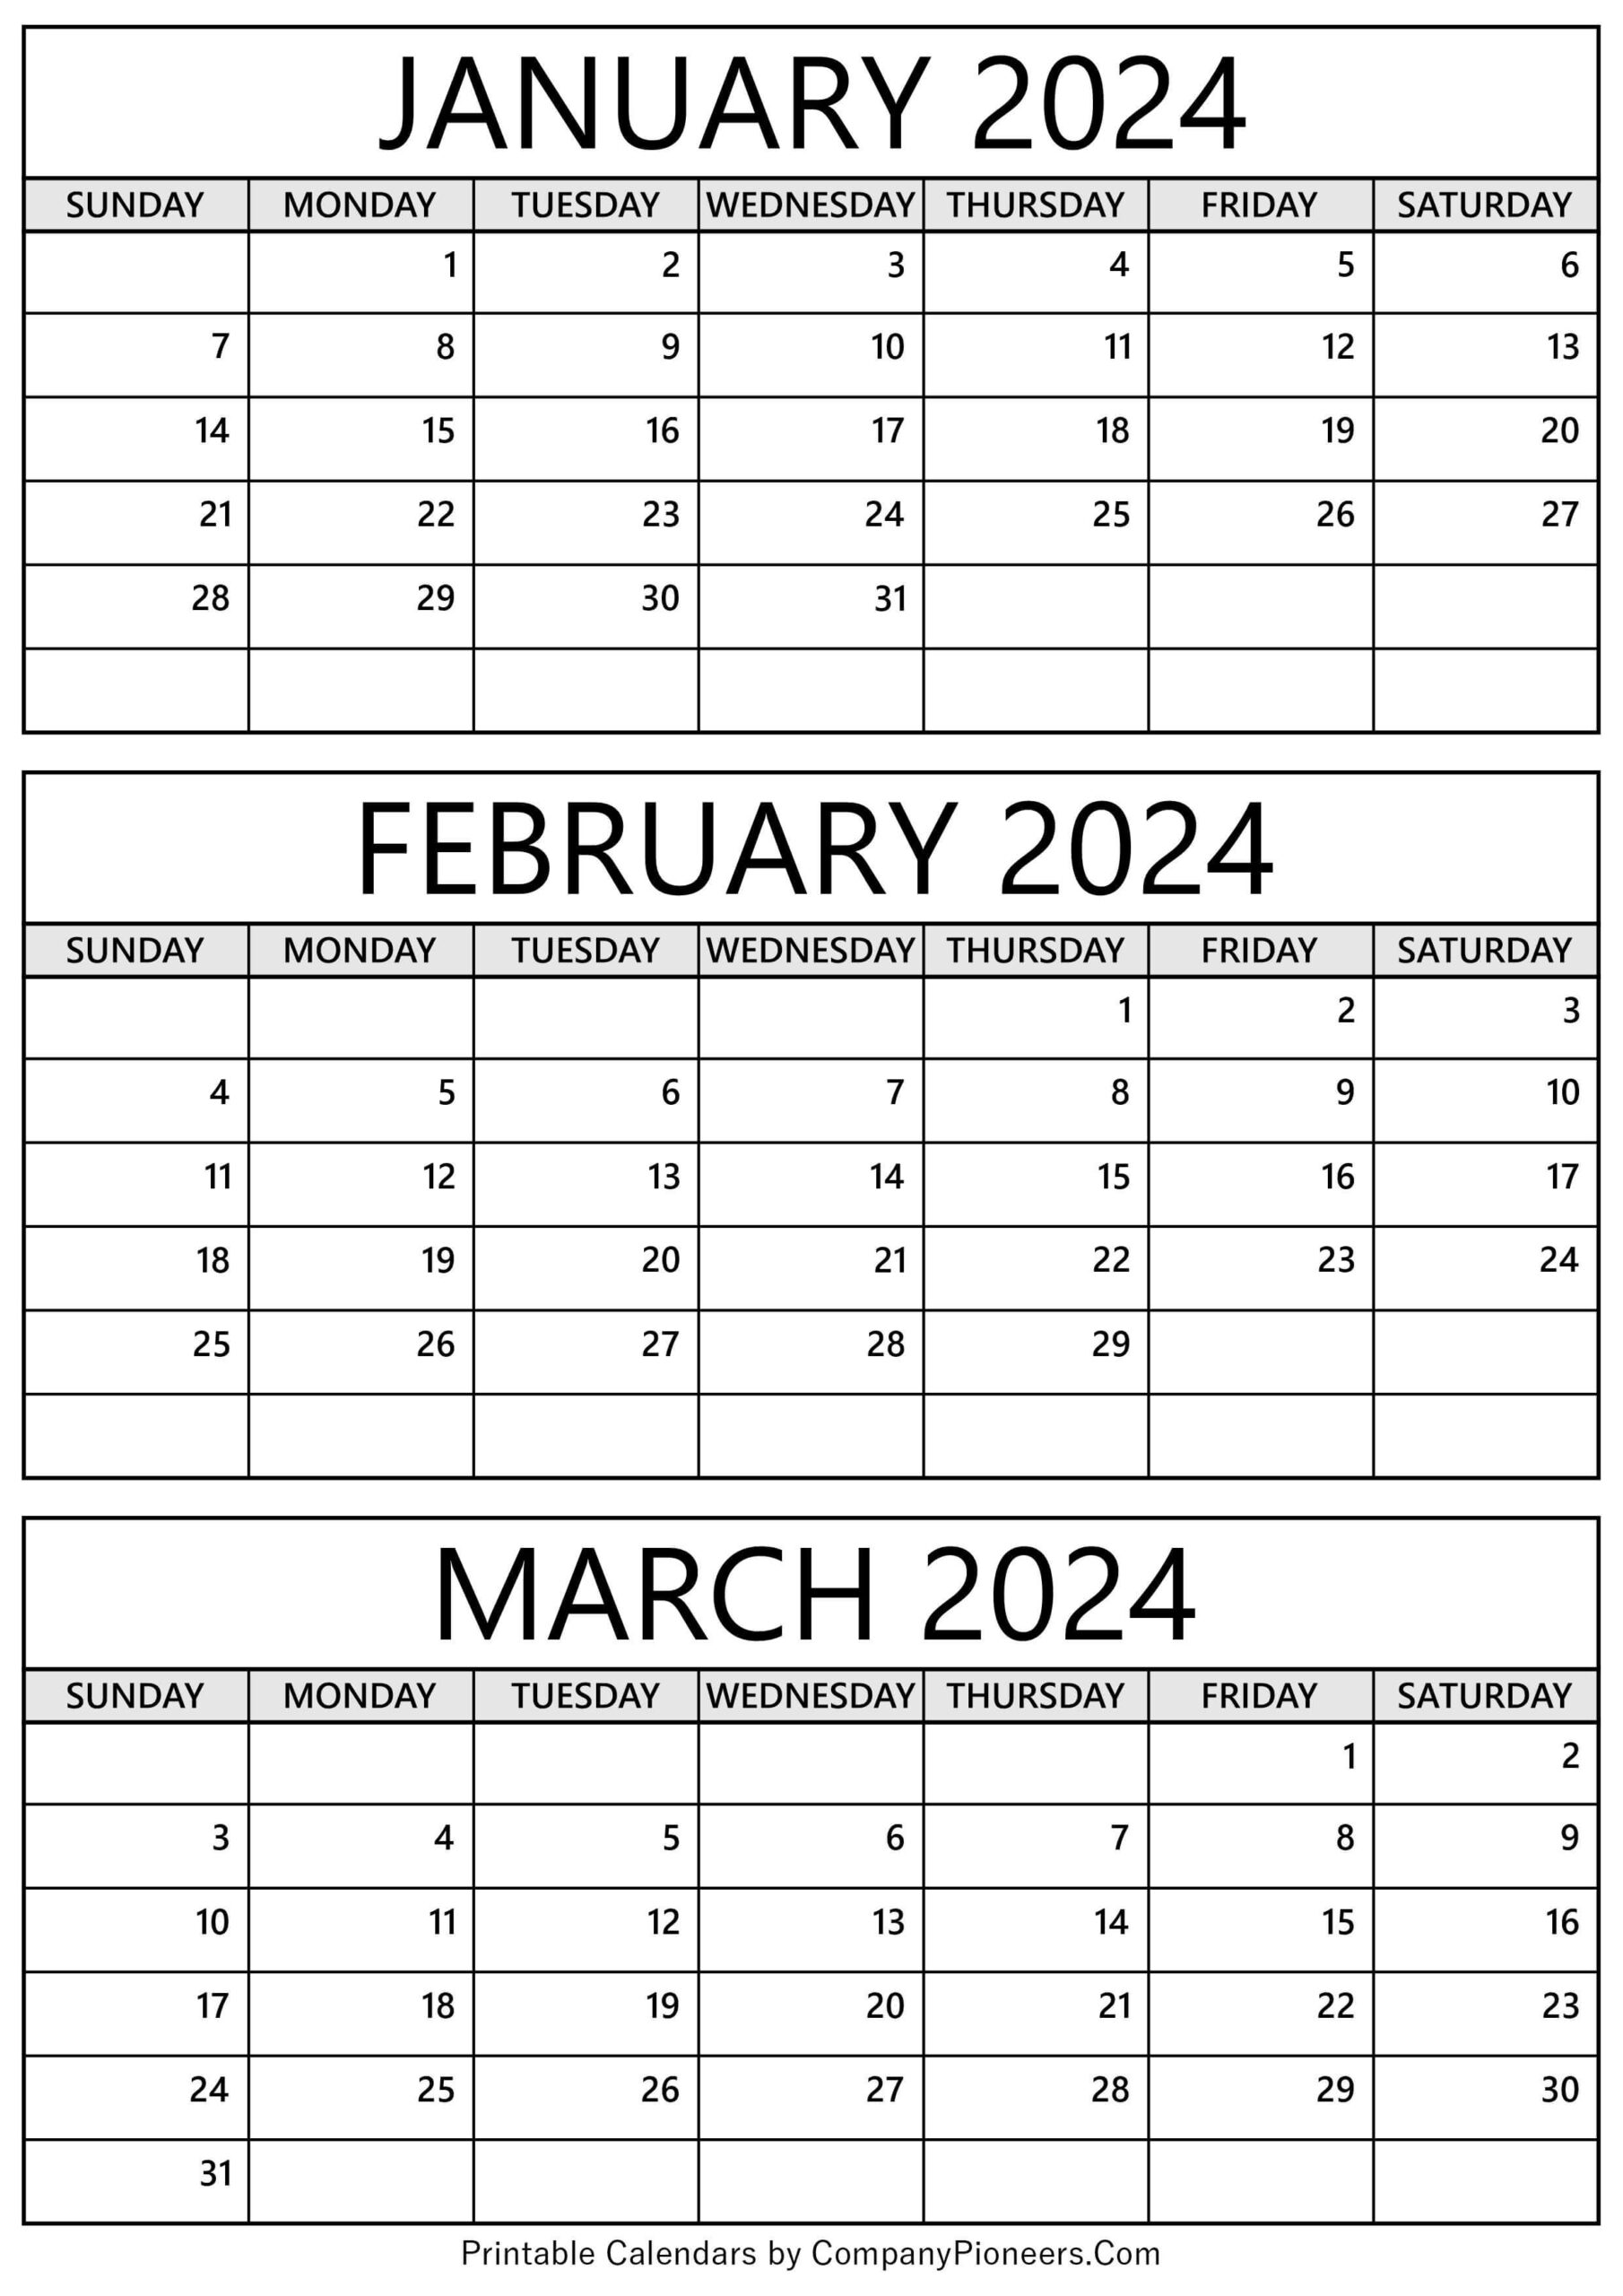 January February March 2024 Calendar Printable - Template regarding February March April 2024 Calendar